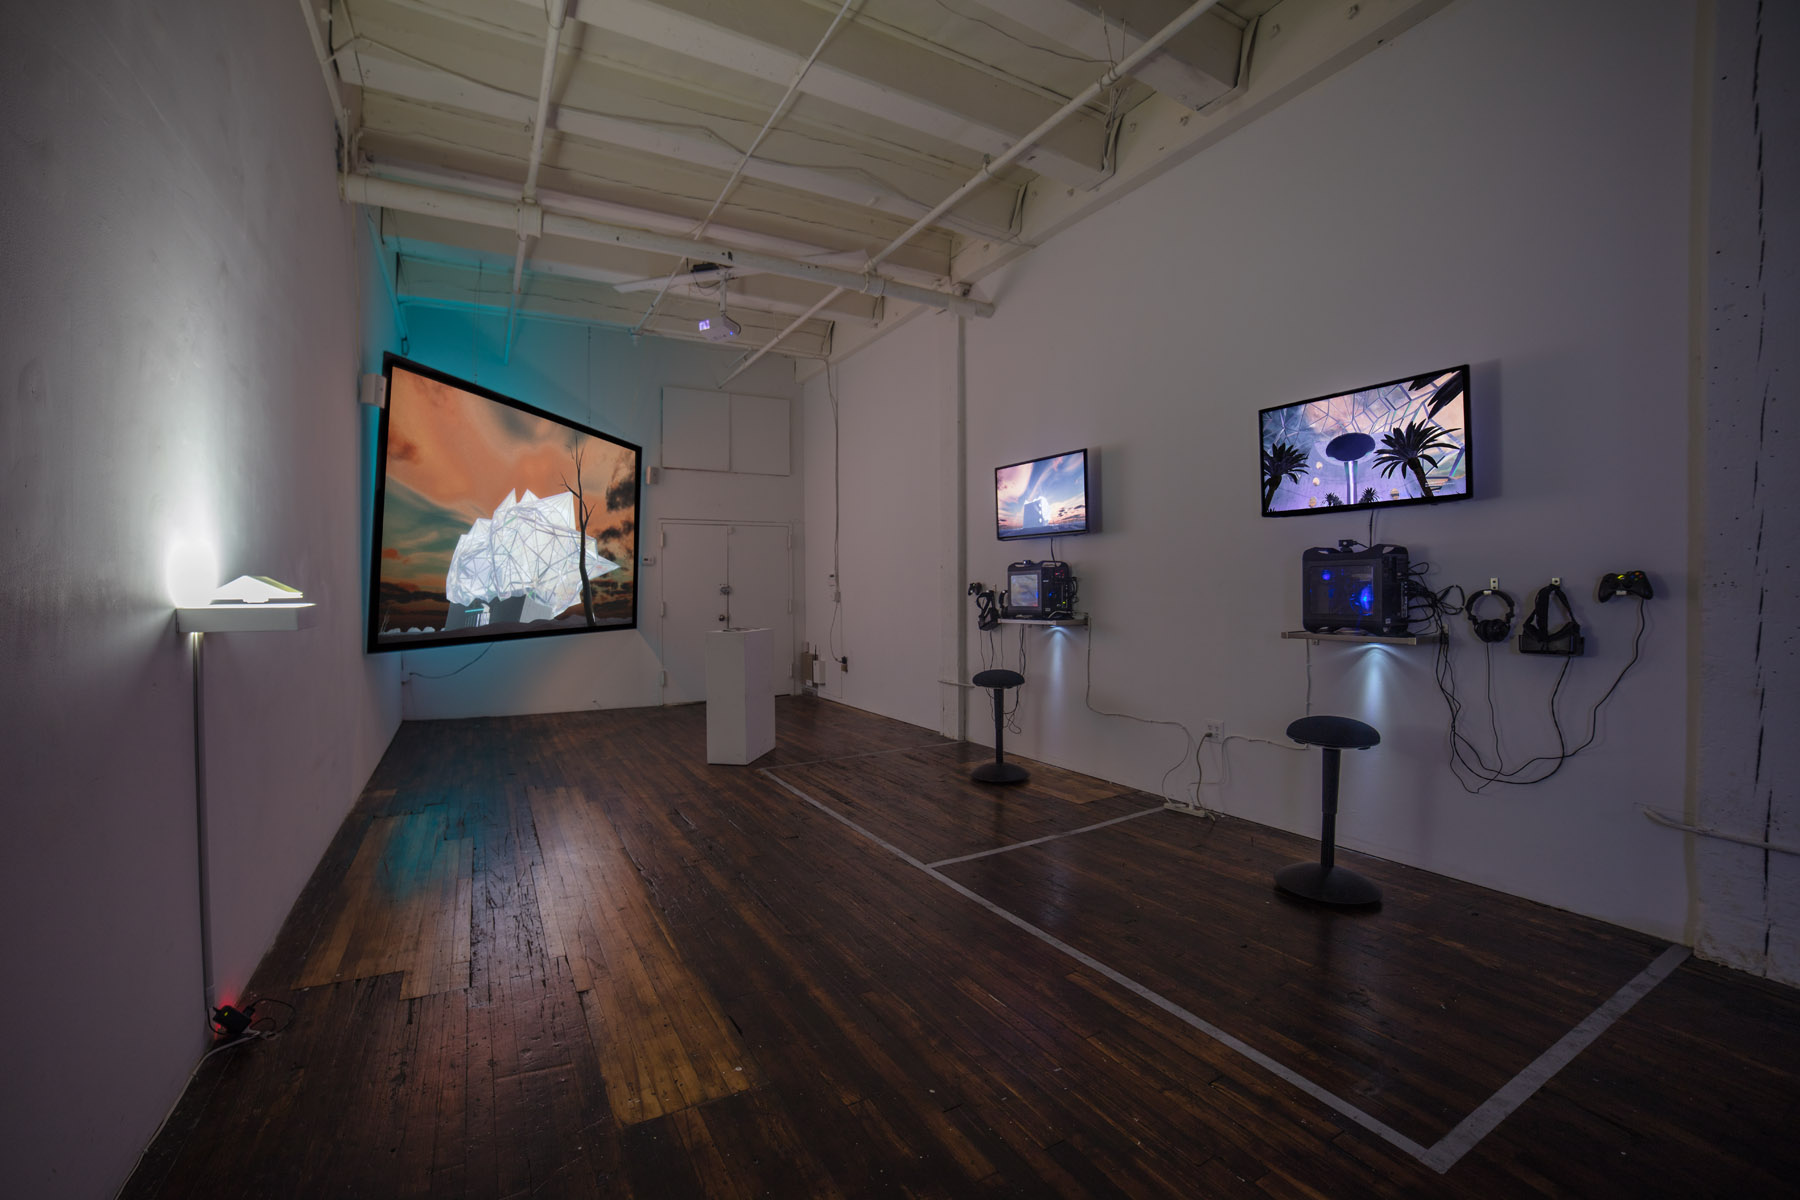 Gallery — Digital Museum of Digital Art